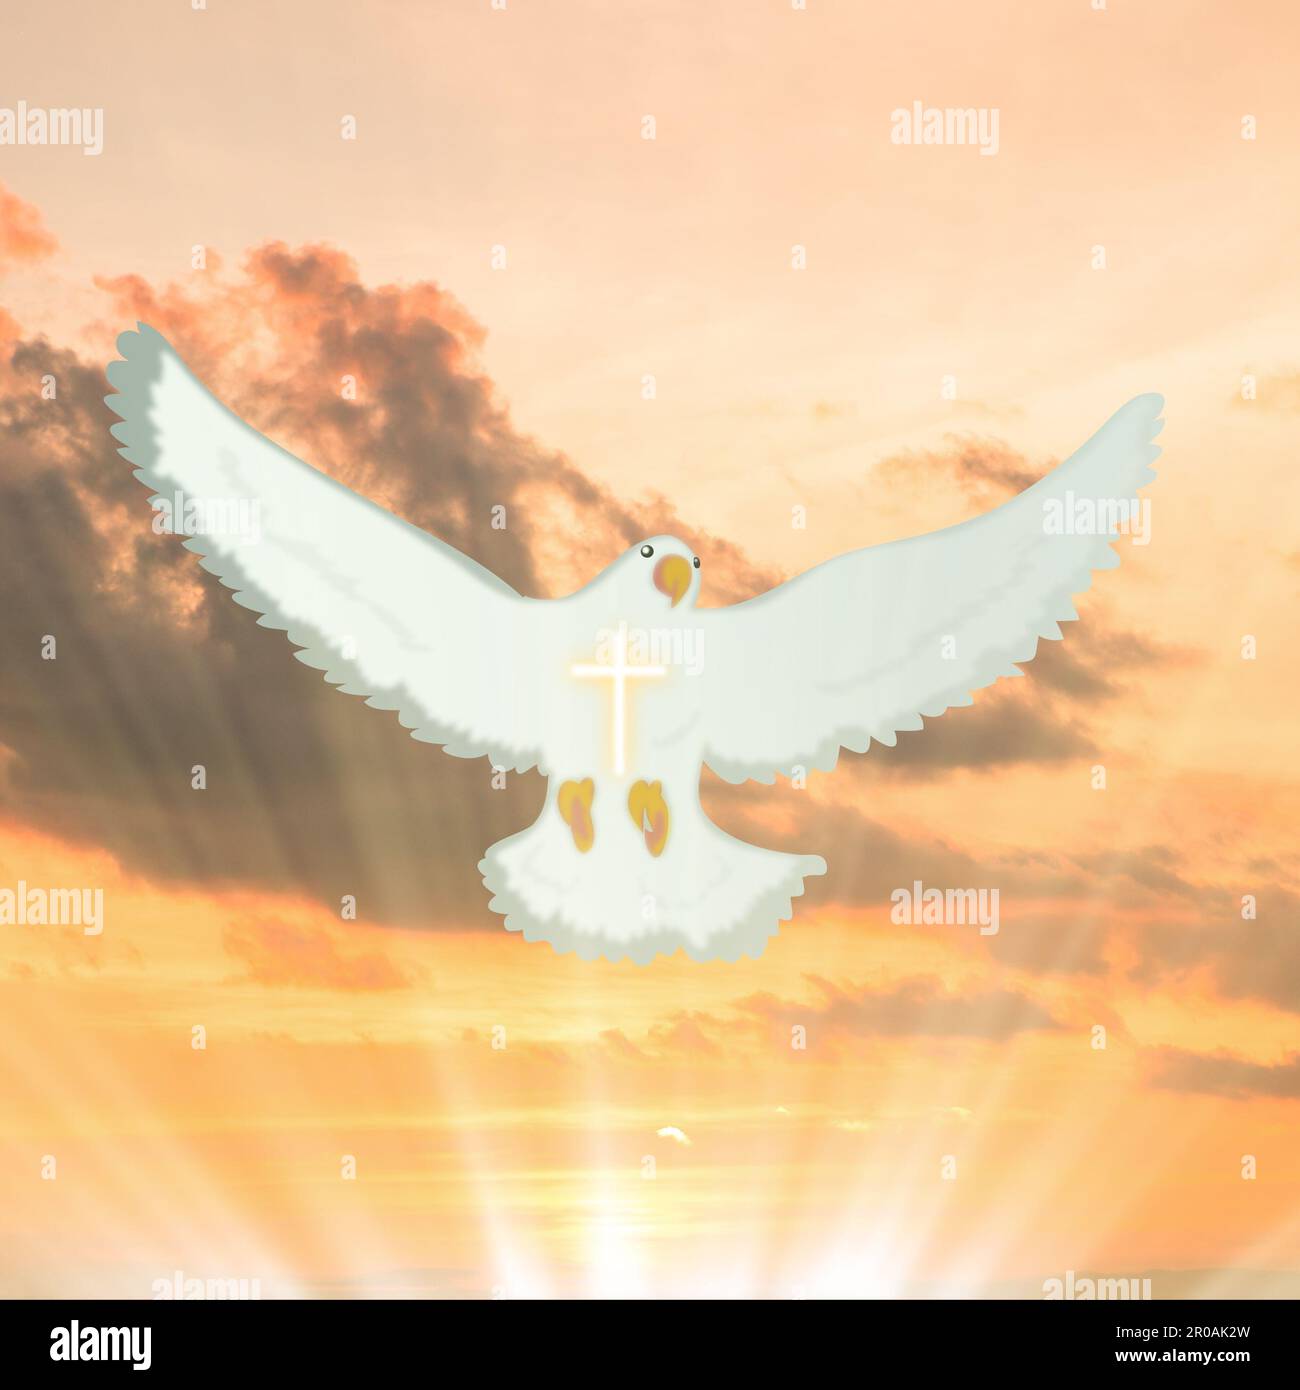 holy spirit silhouette